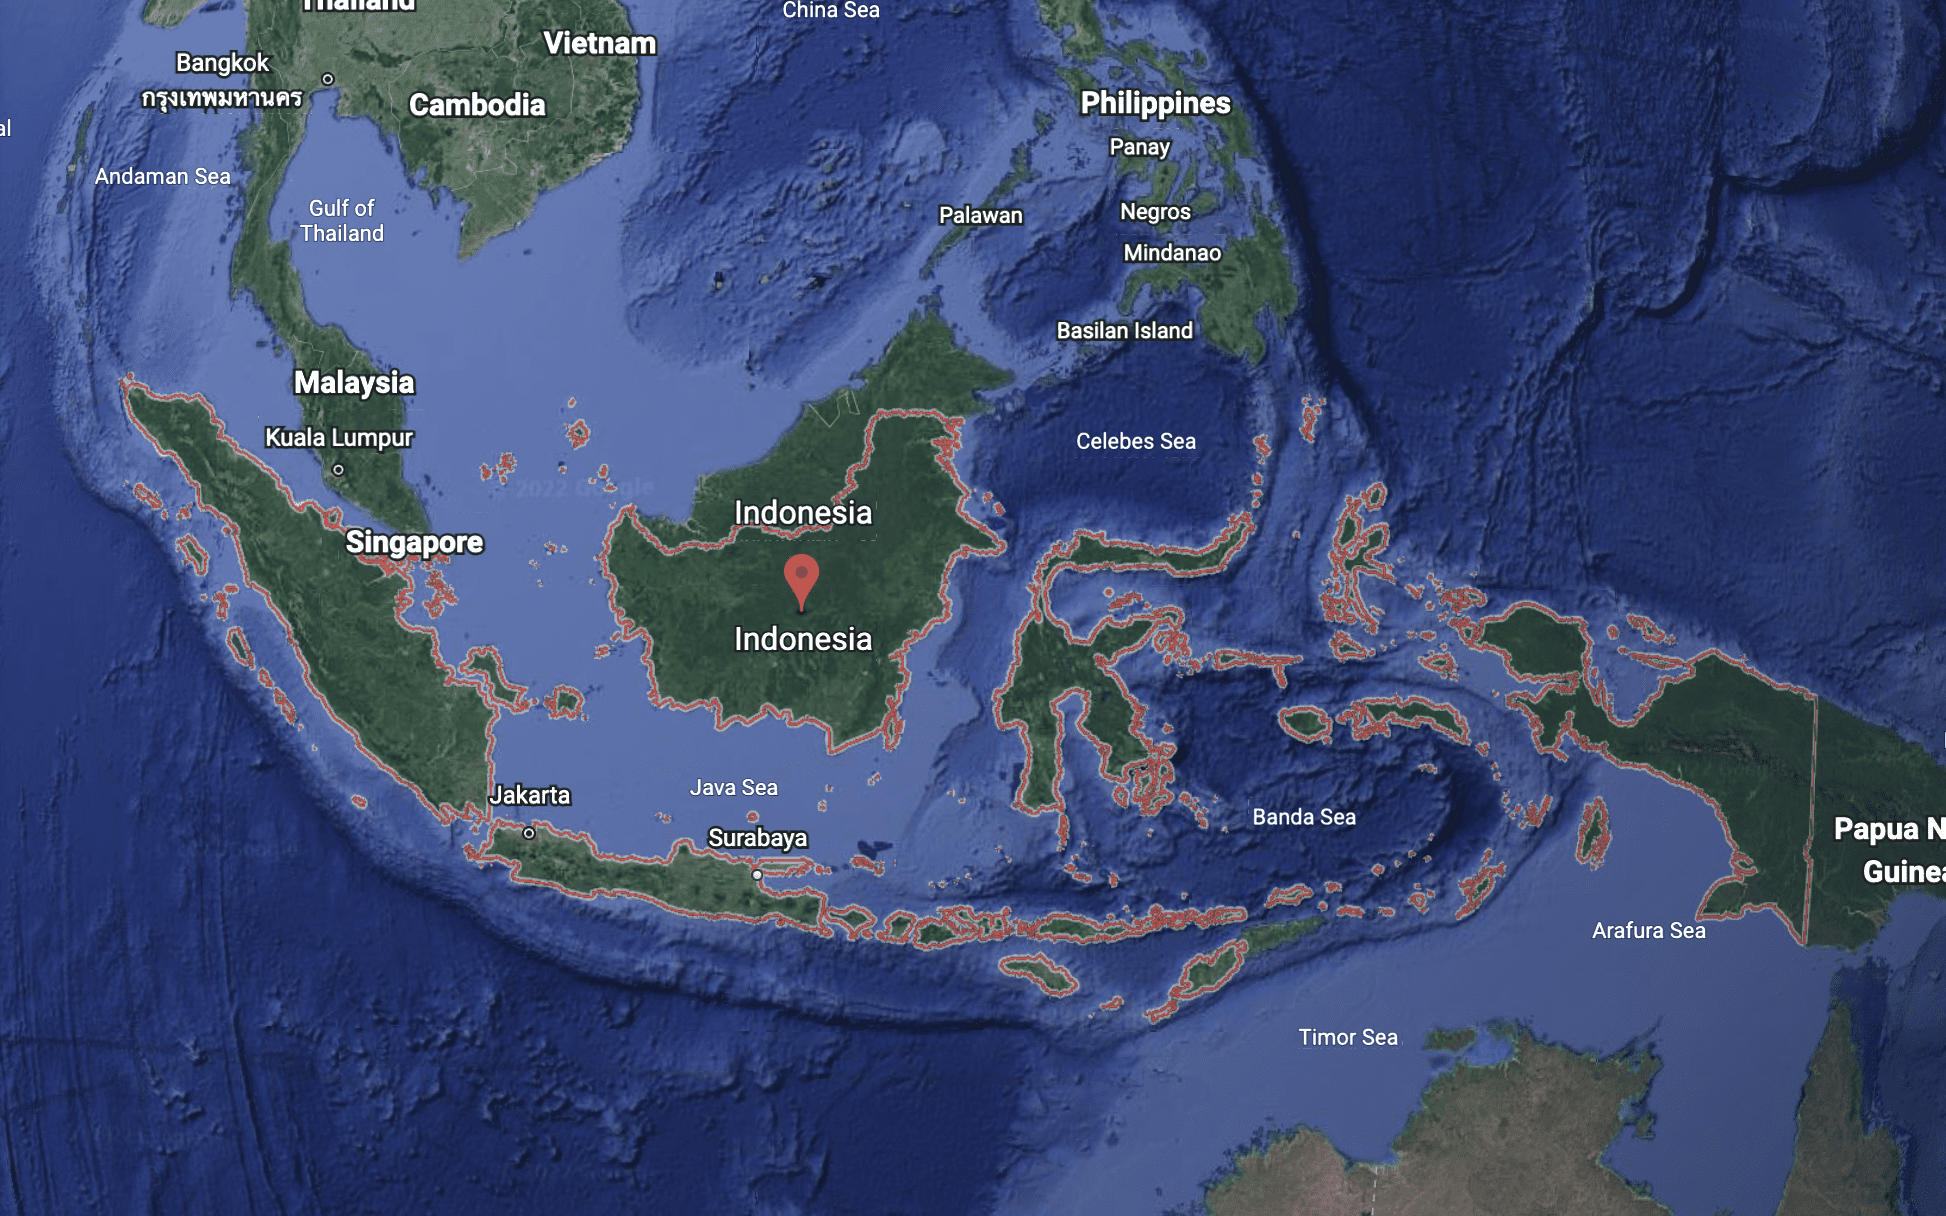 Google Earth Satellite Image of Indonesia